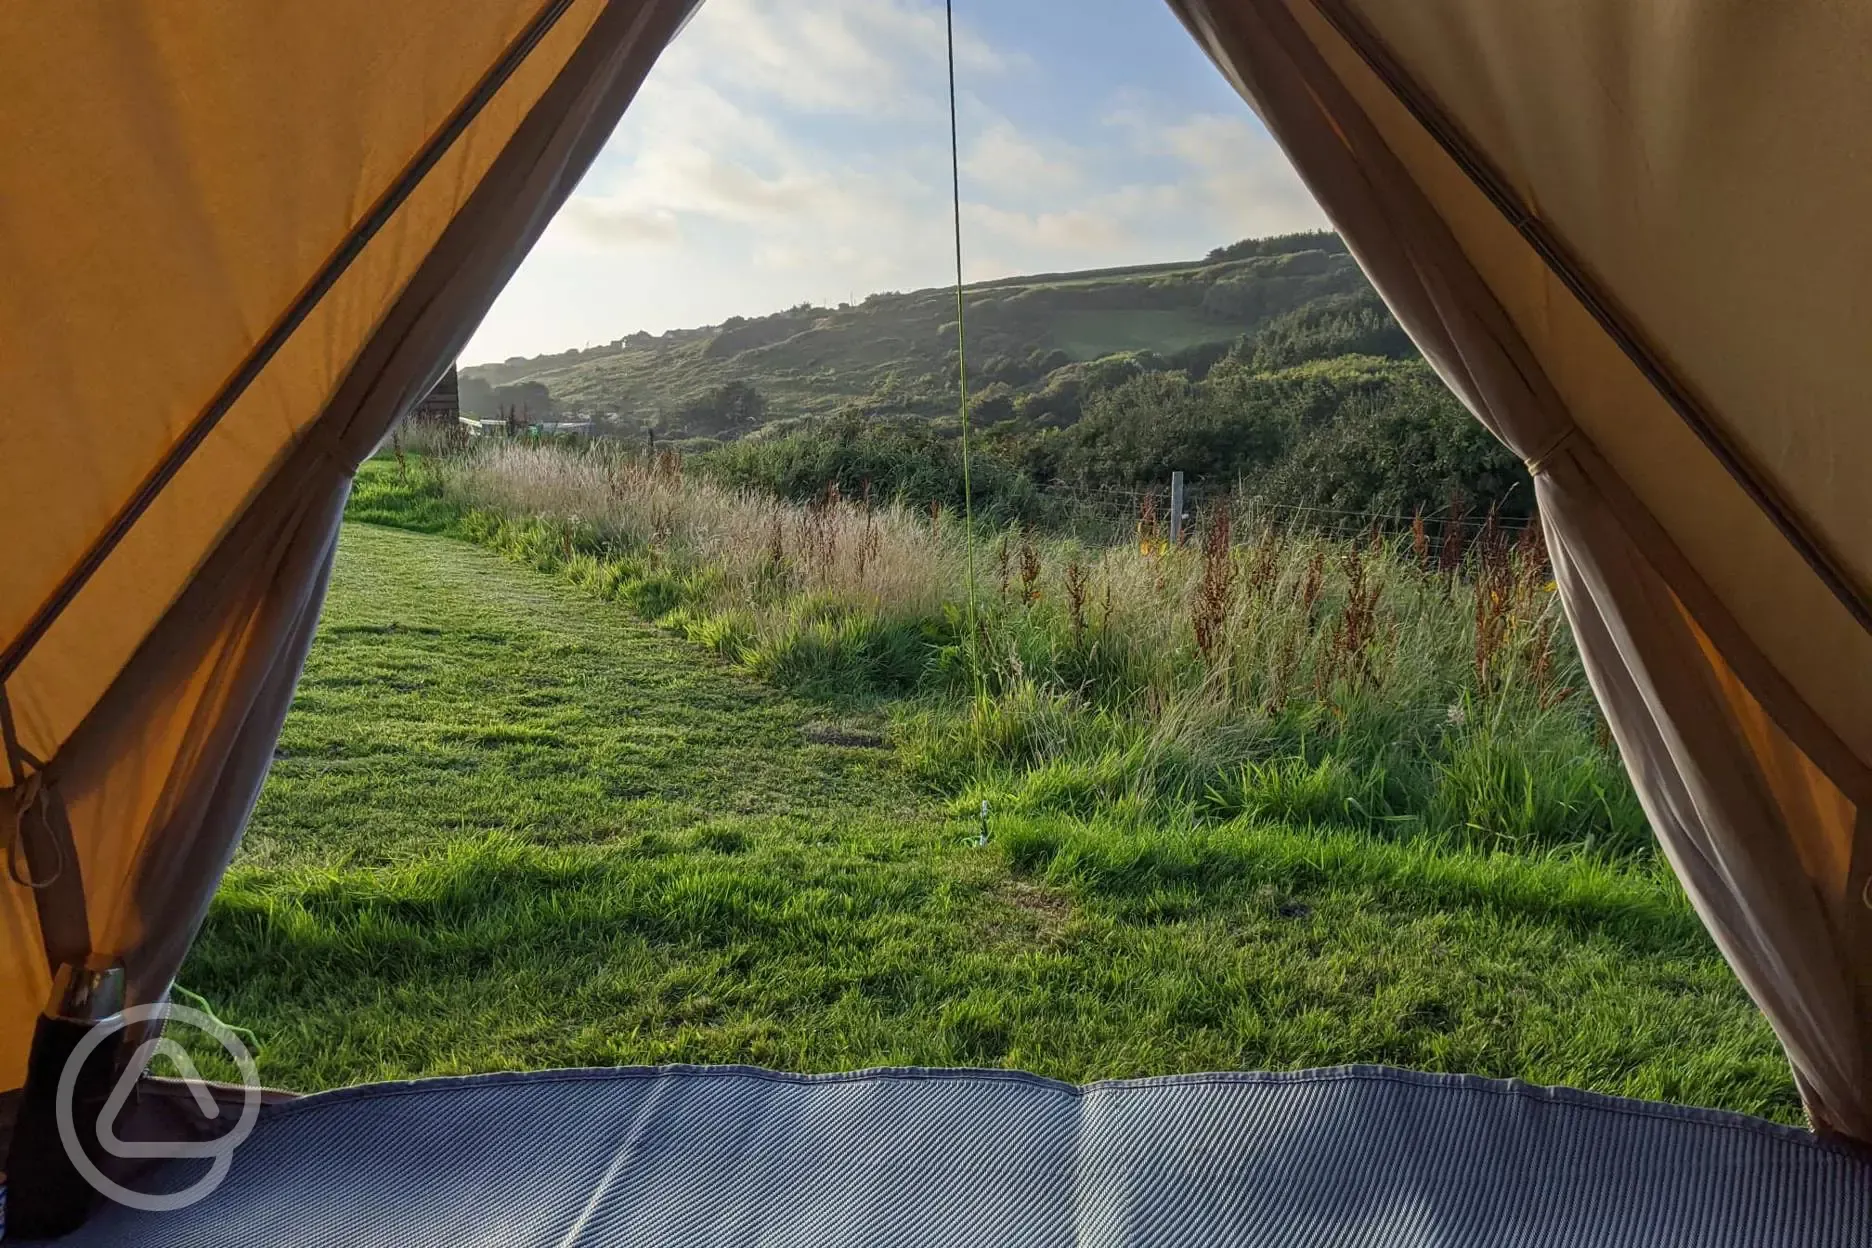 Bell tent views